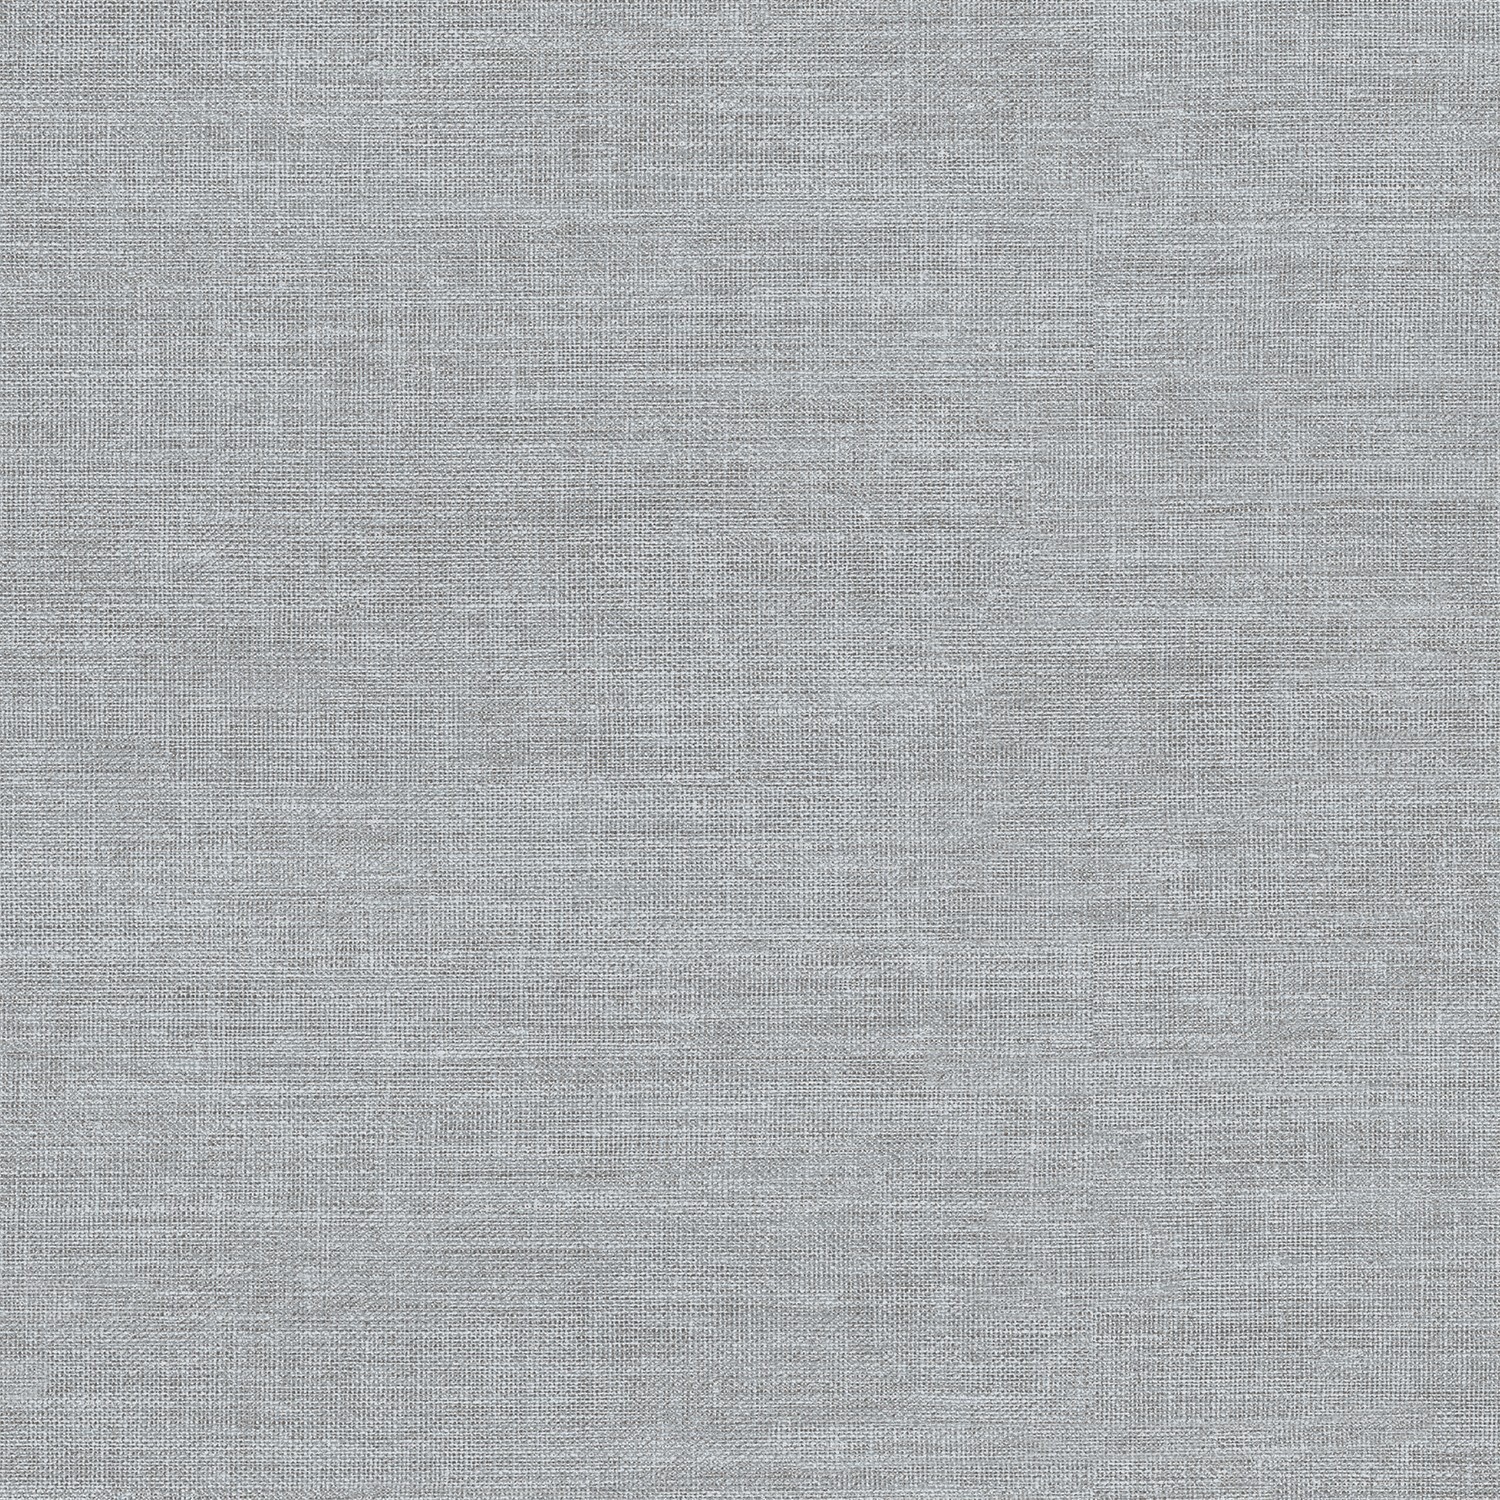 Plain dark gray jute canvas wallpaper